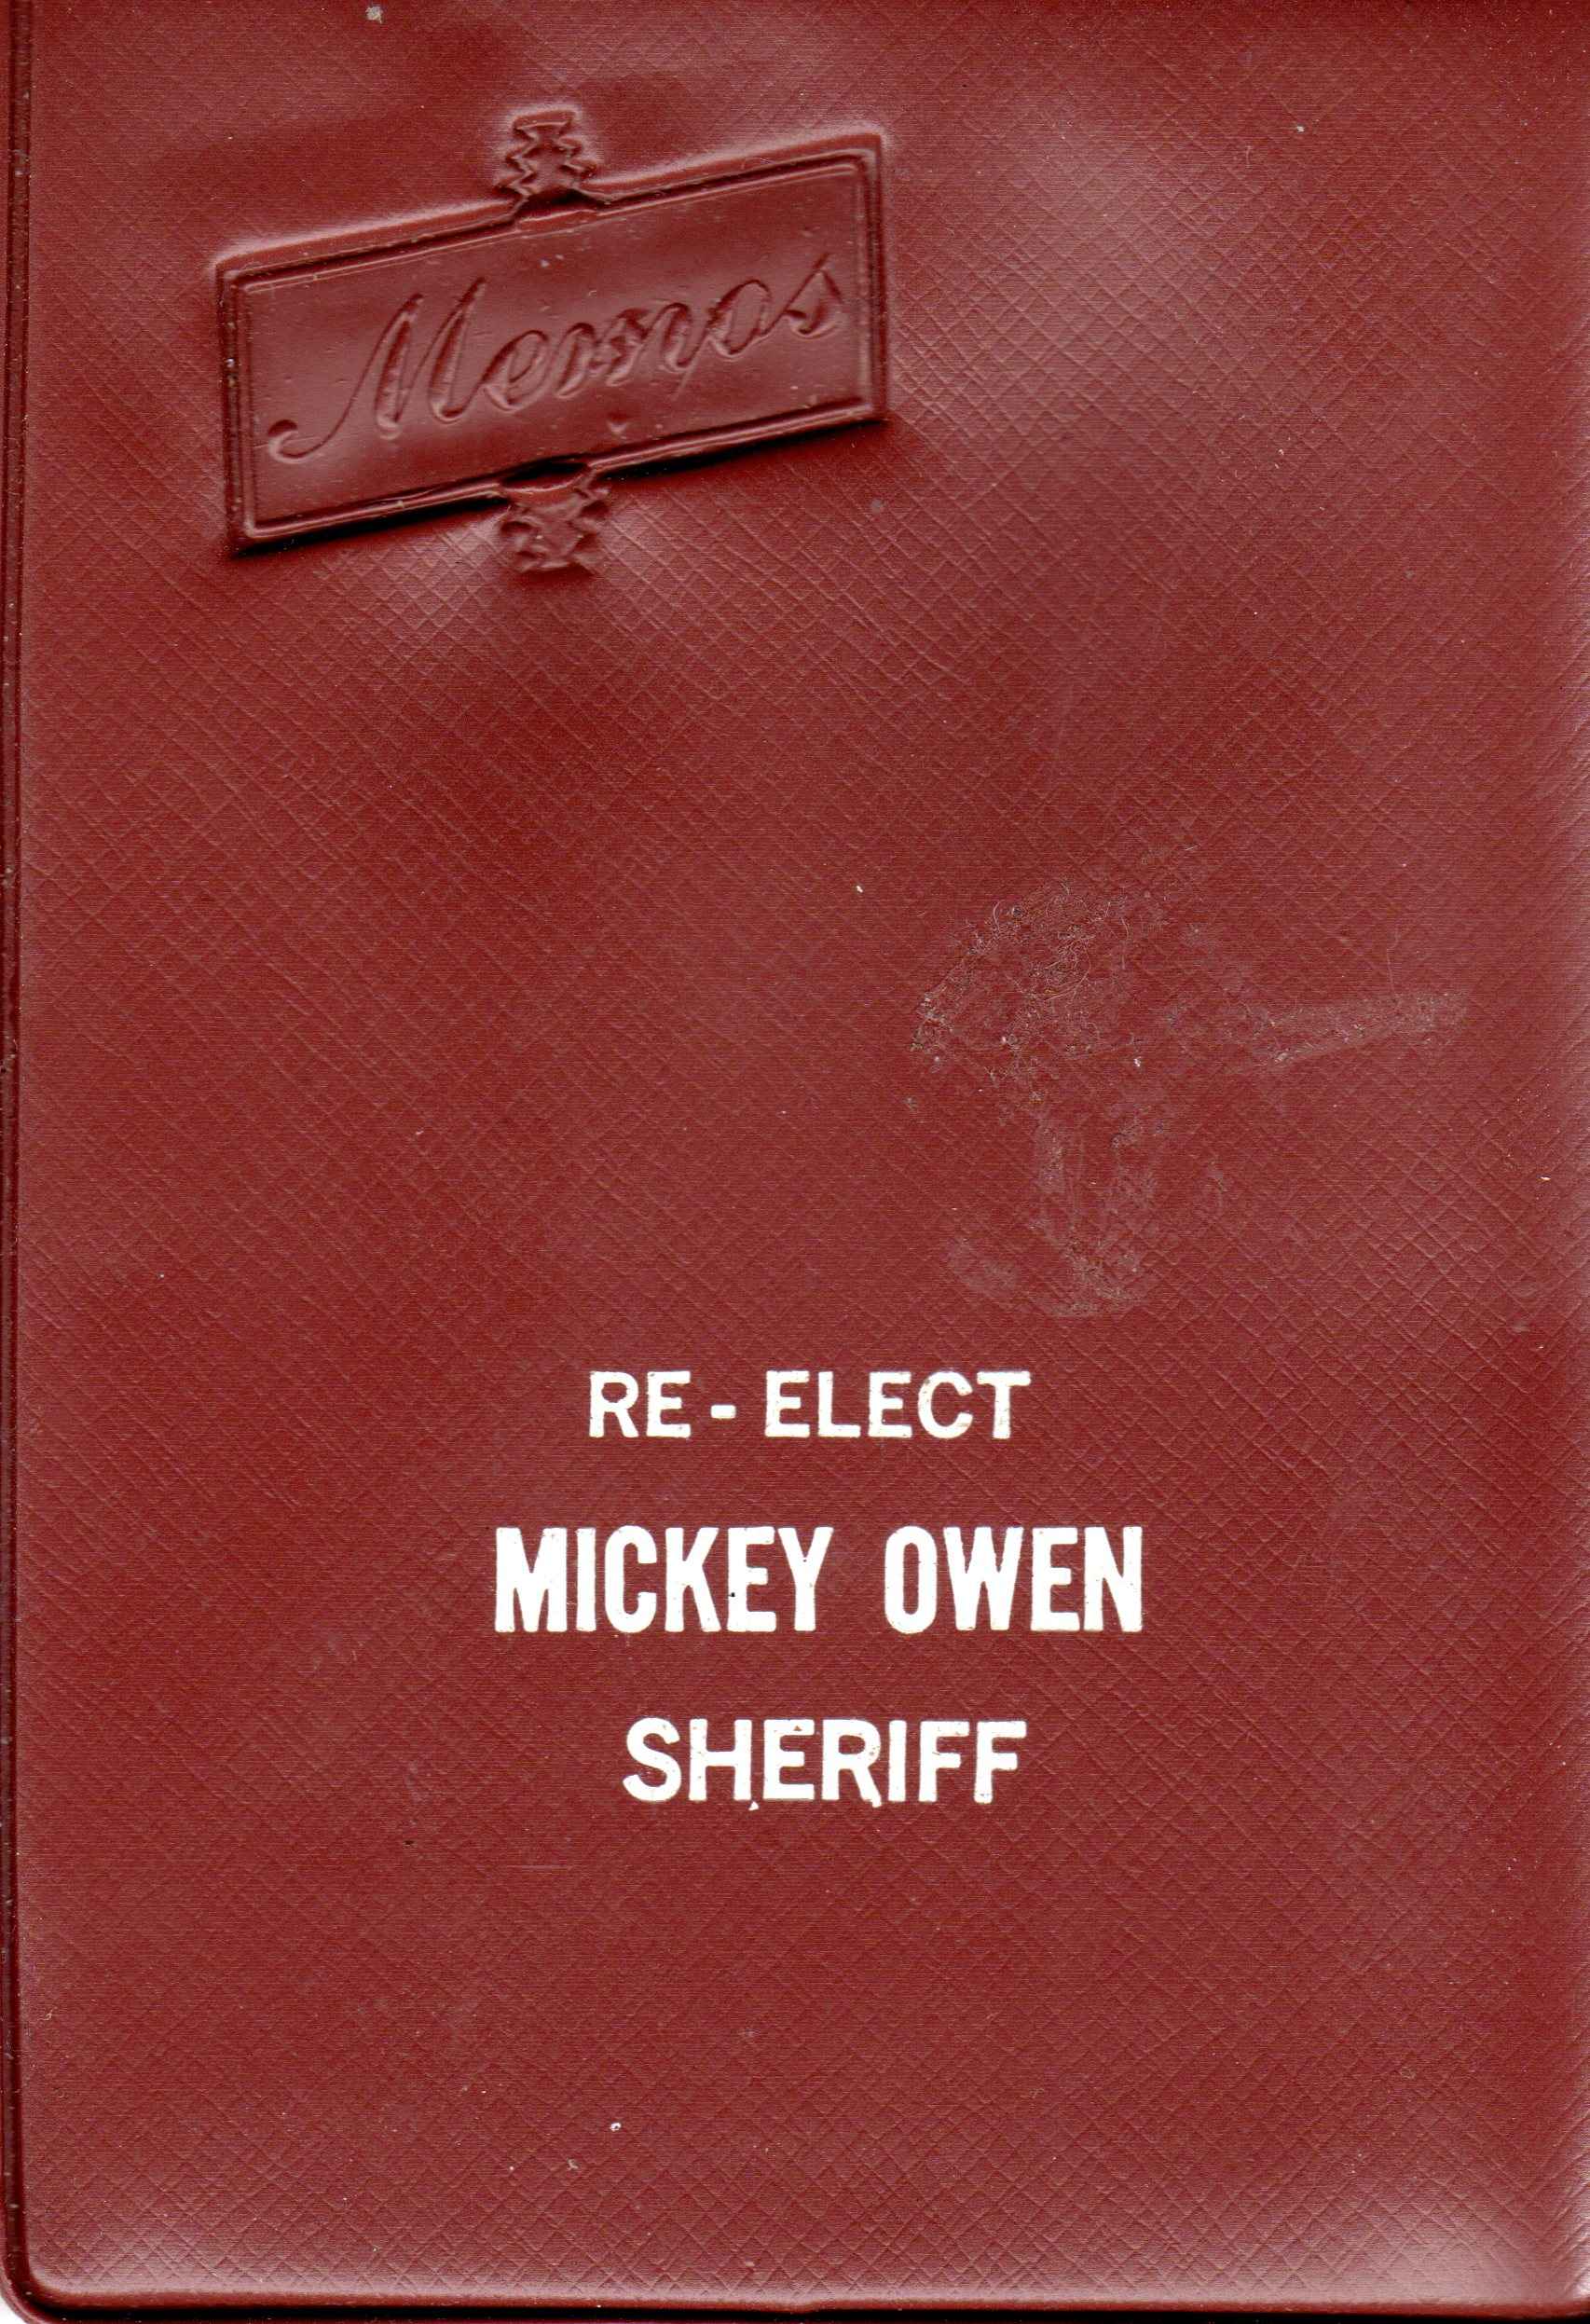 Re-elect Mickey Owen Sheriff memo pad